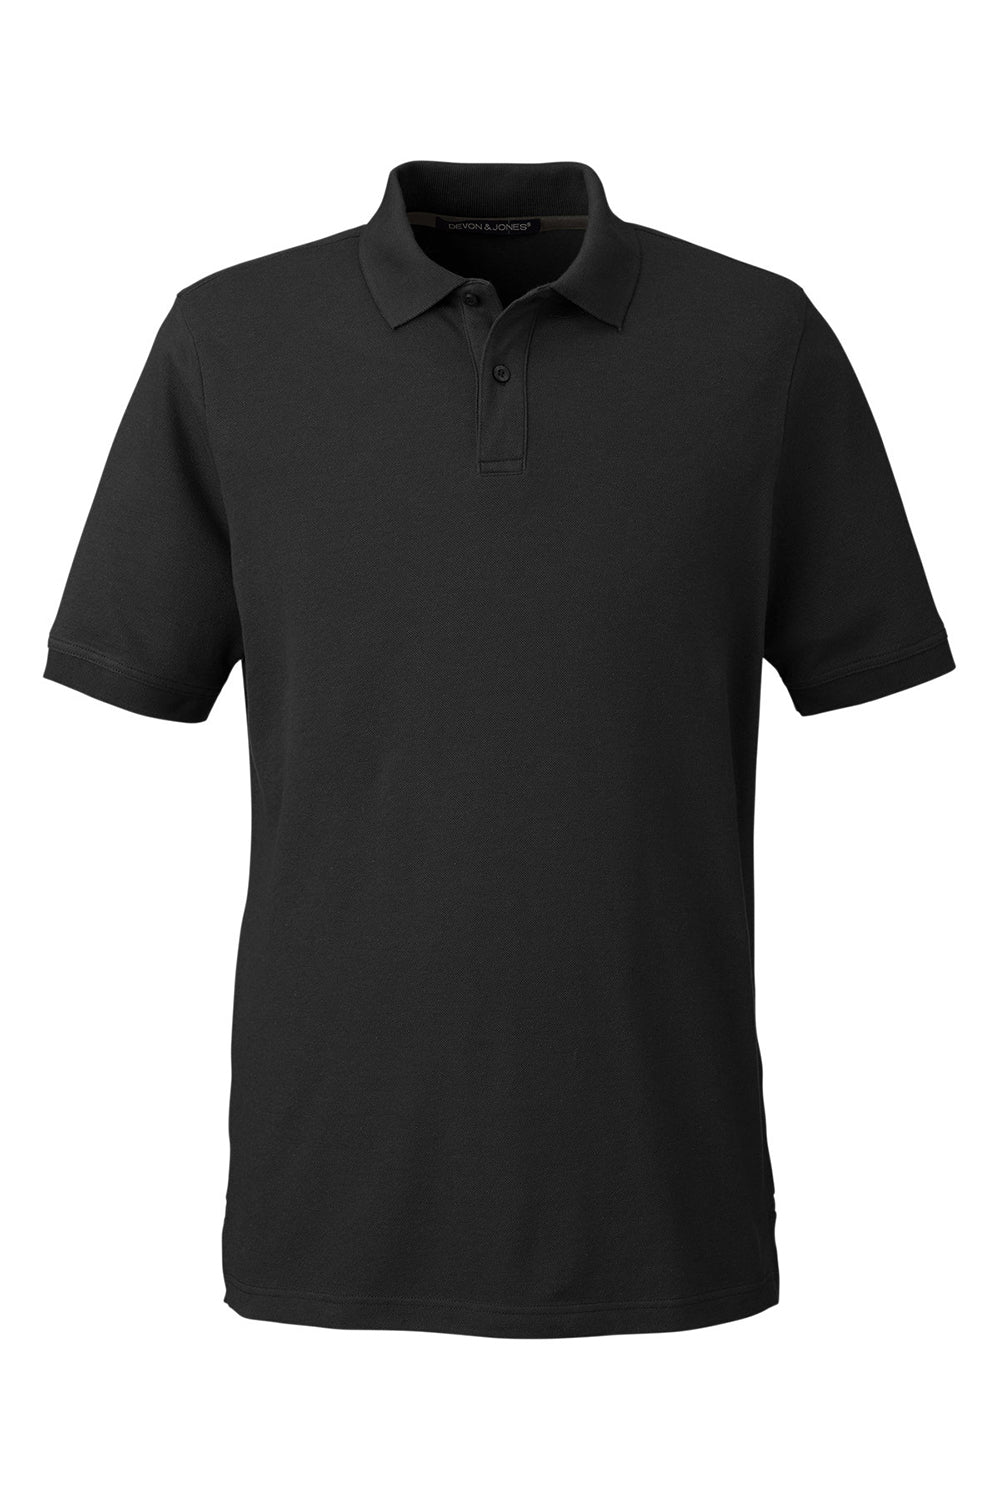 Devon & Jones DG100 Mens New Classics Performance Moisture Wicking Short Sleeve Polo Shirt Black Flat Front